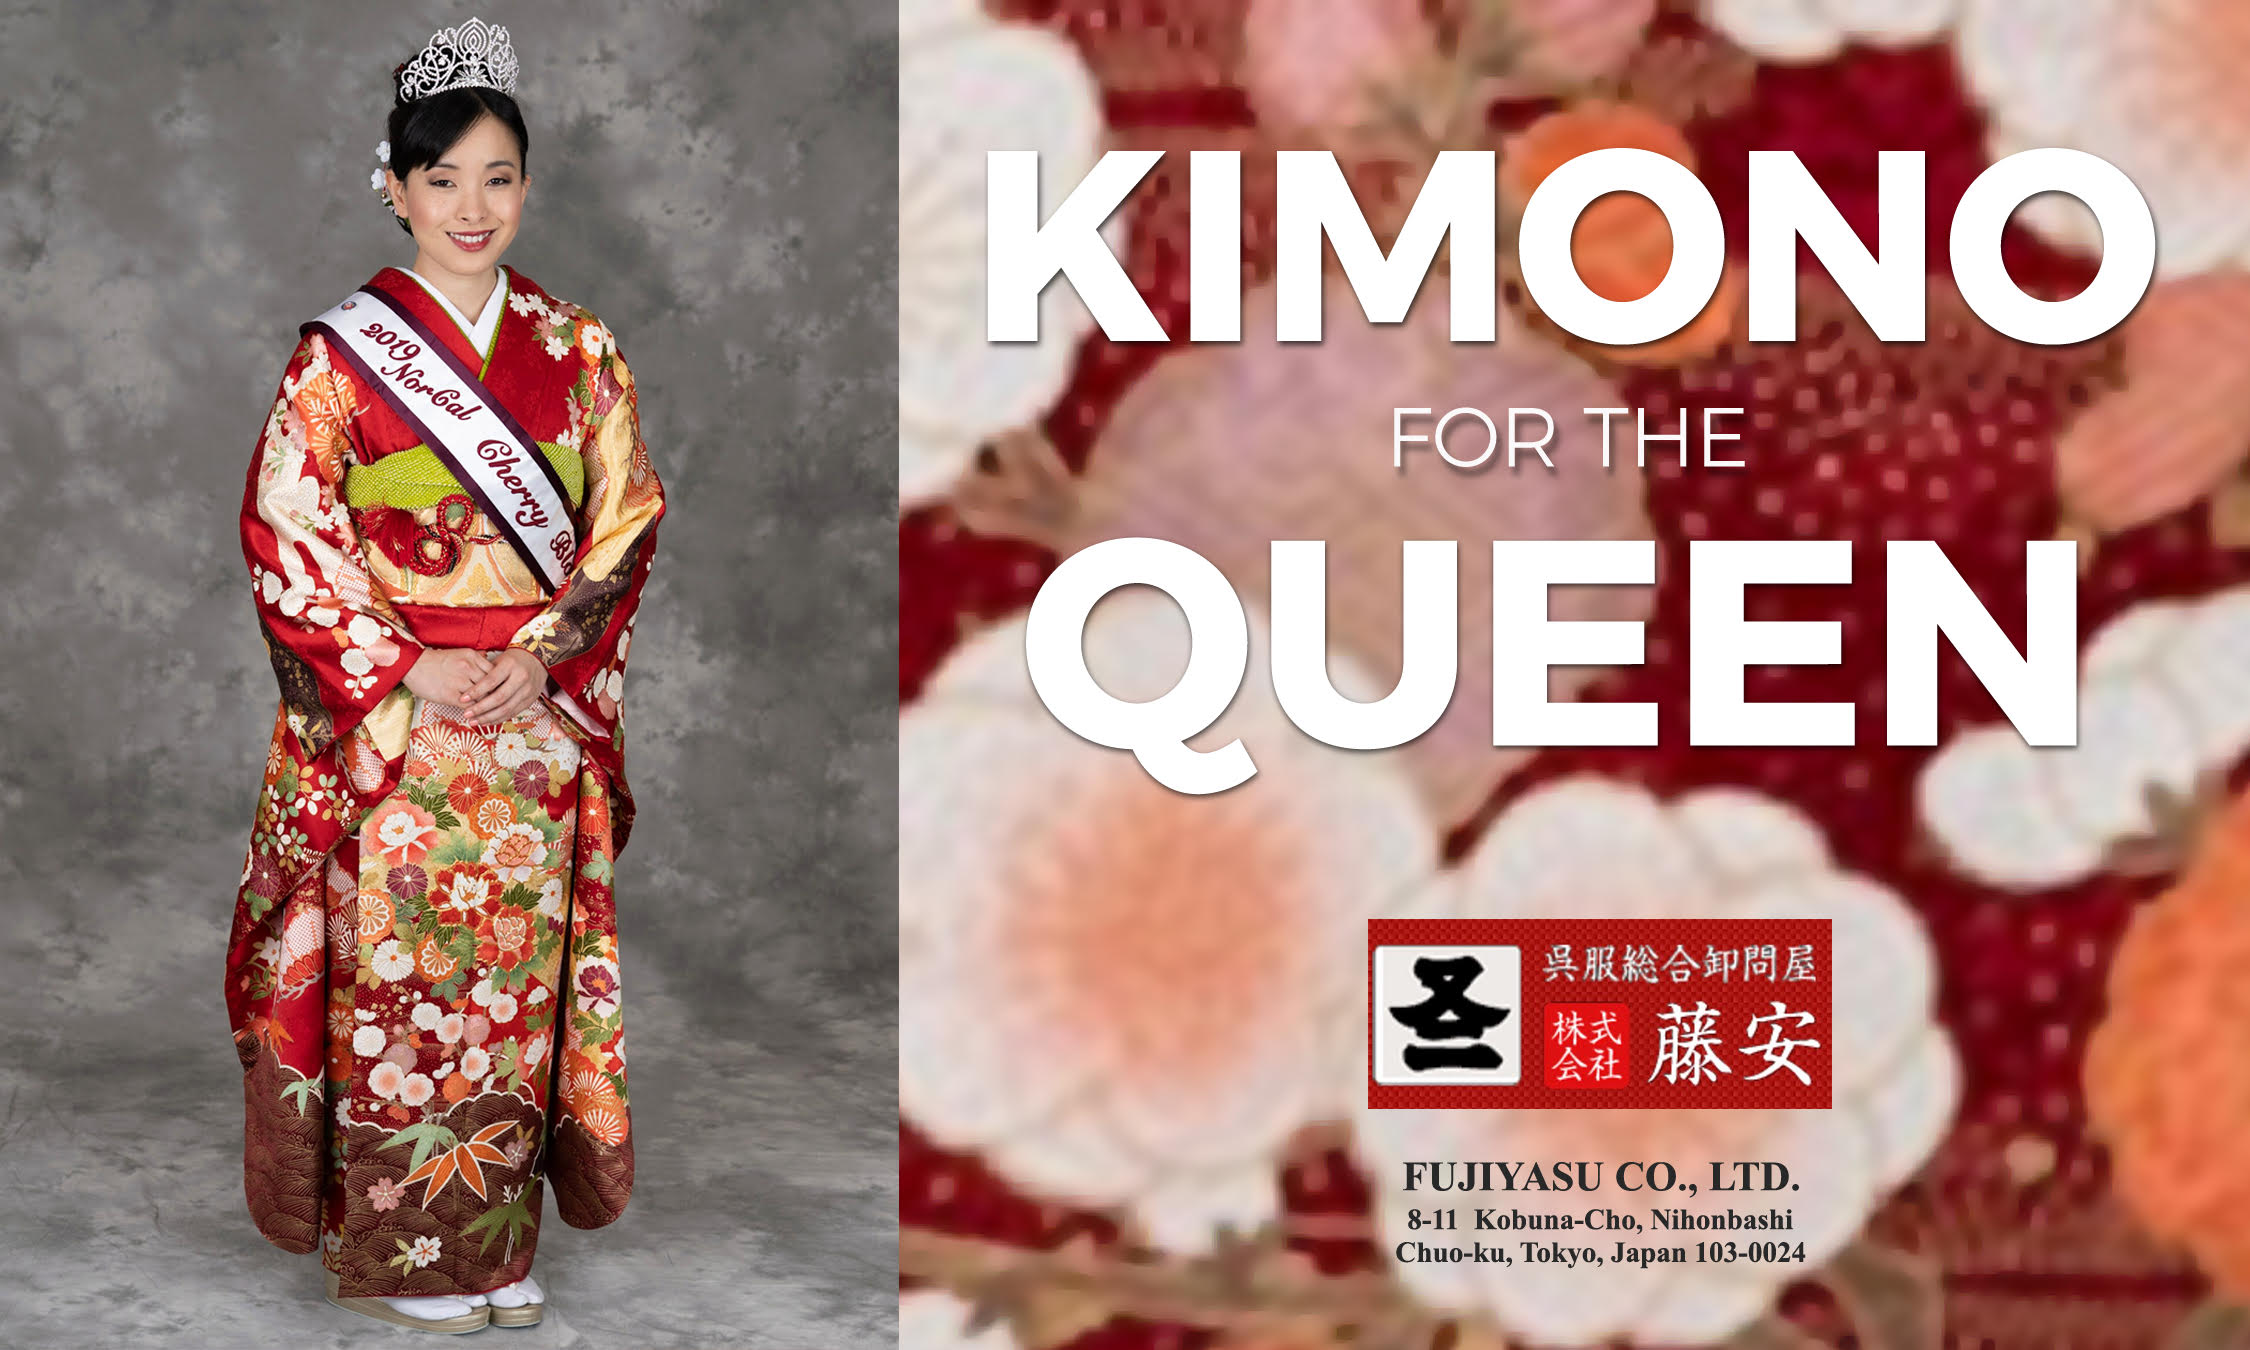 The Queen's Kimono & the Unforgettable Story of the Fujiyasu